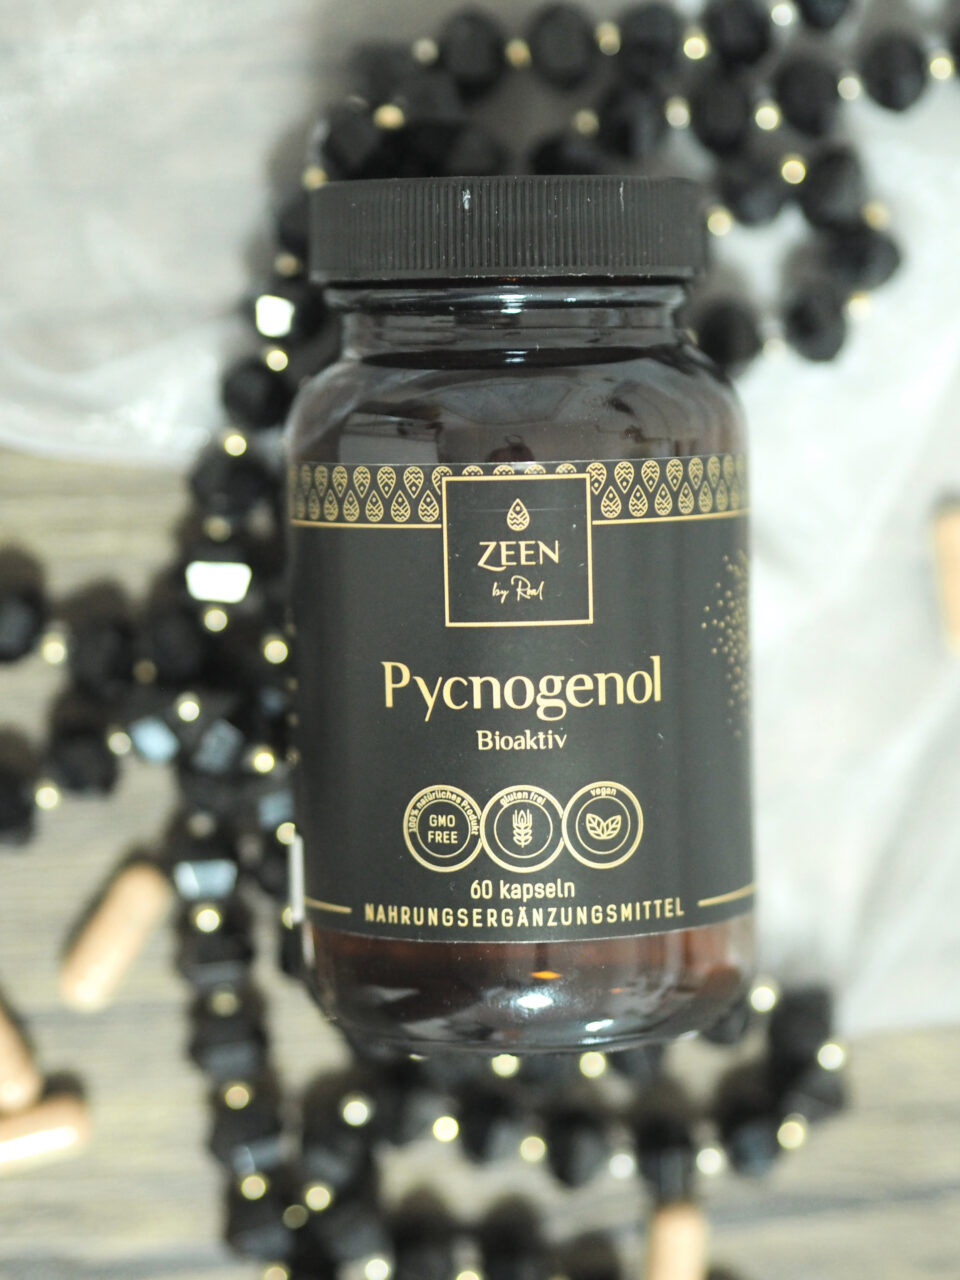 Pycnogenol I ZEEN by Roal